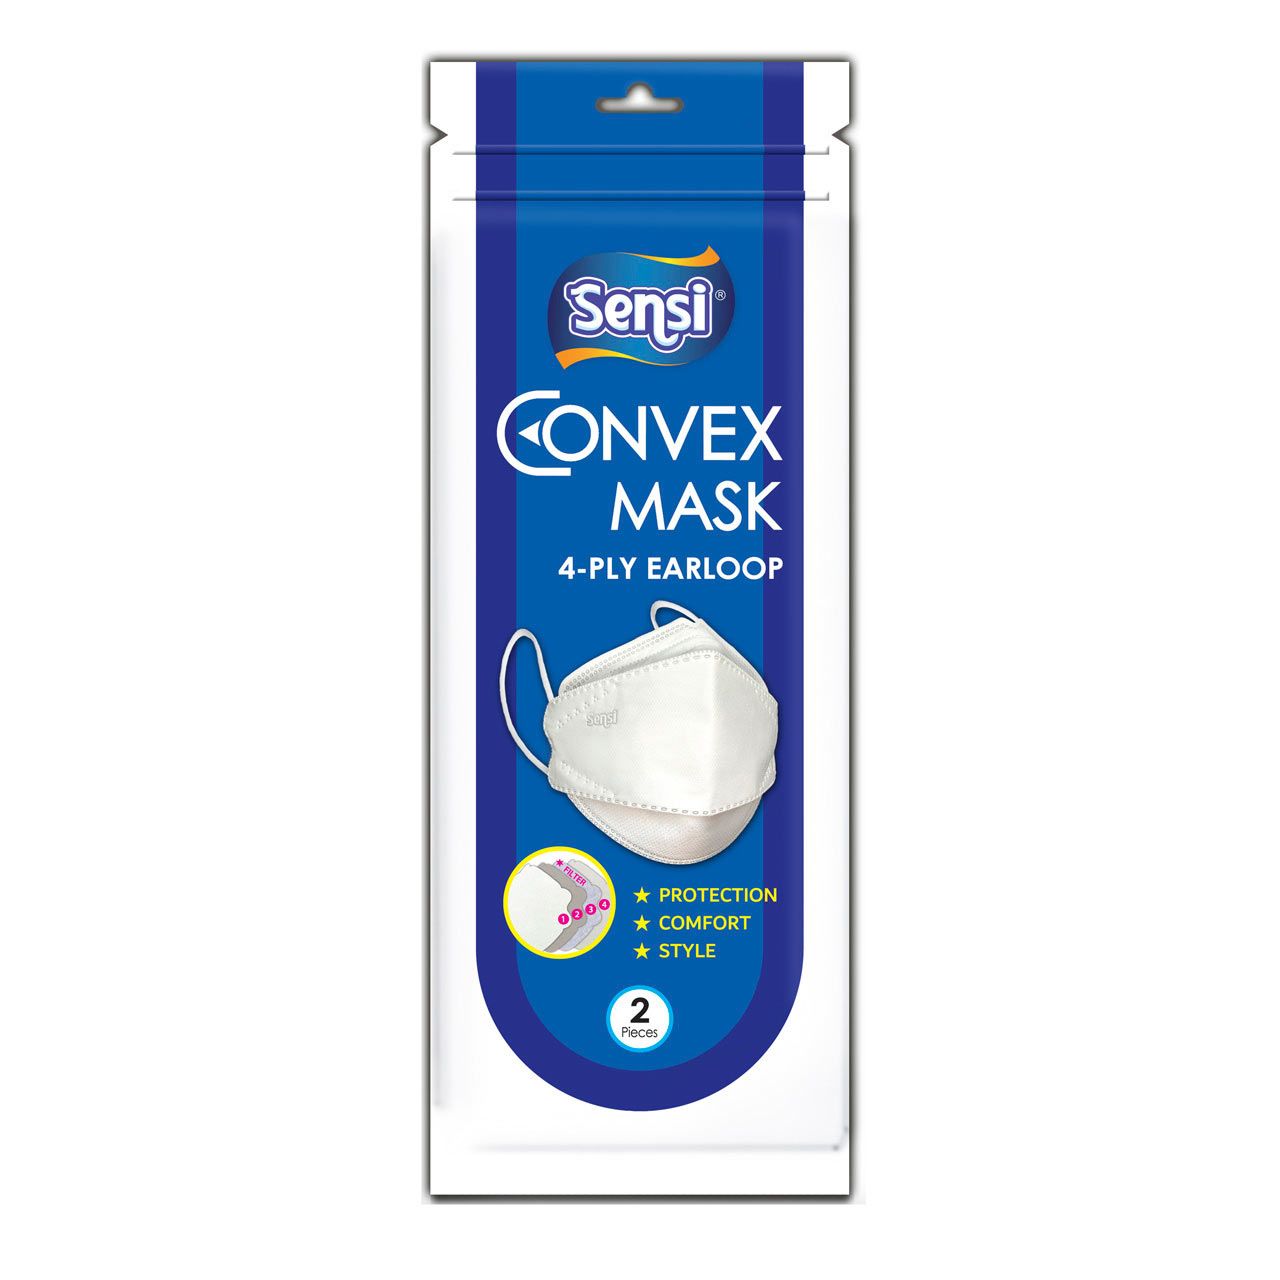 Sensi Convex Mask 4-Ply Earloop 2's White - 1